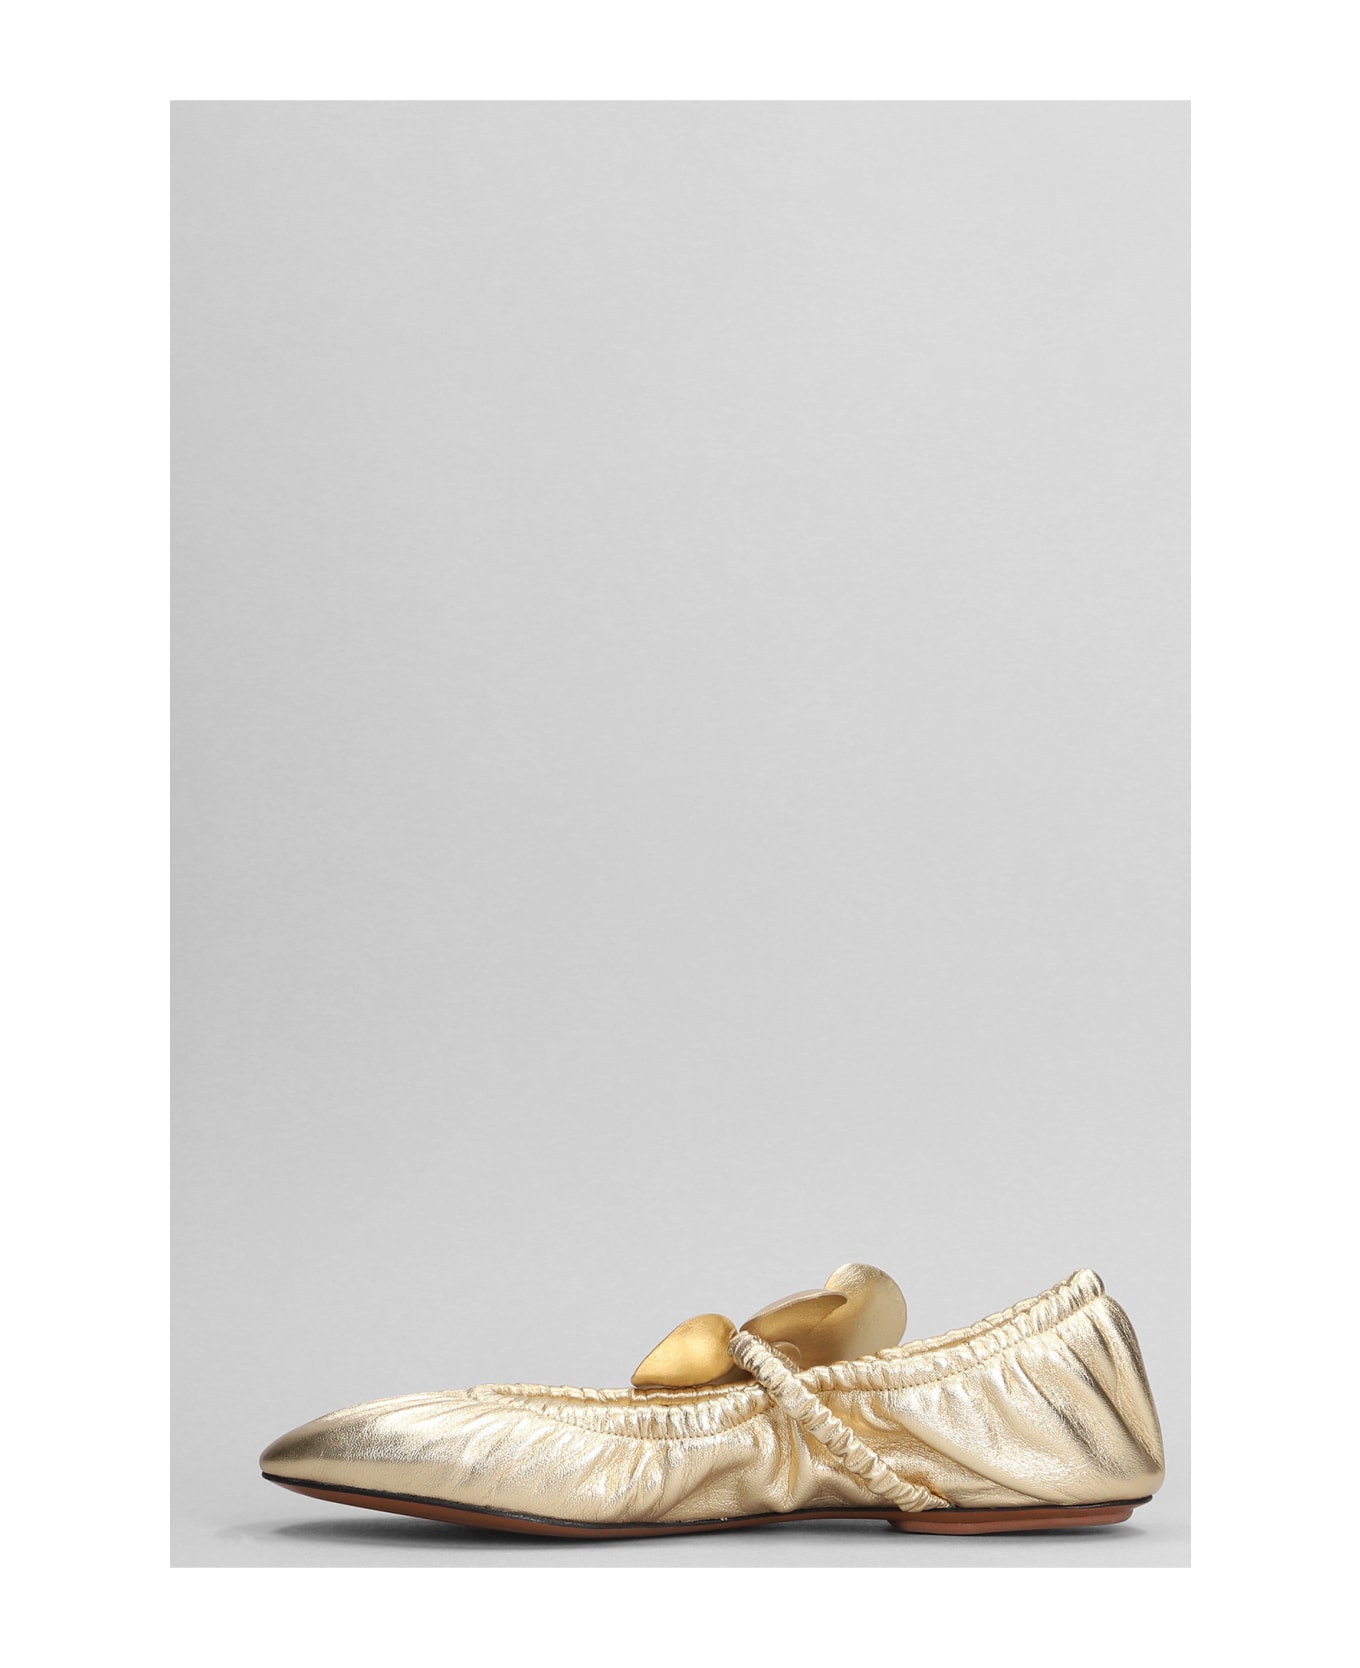 Zimmermann Ballet Flats In Gold Leather - gold フラットシューズ